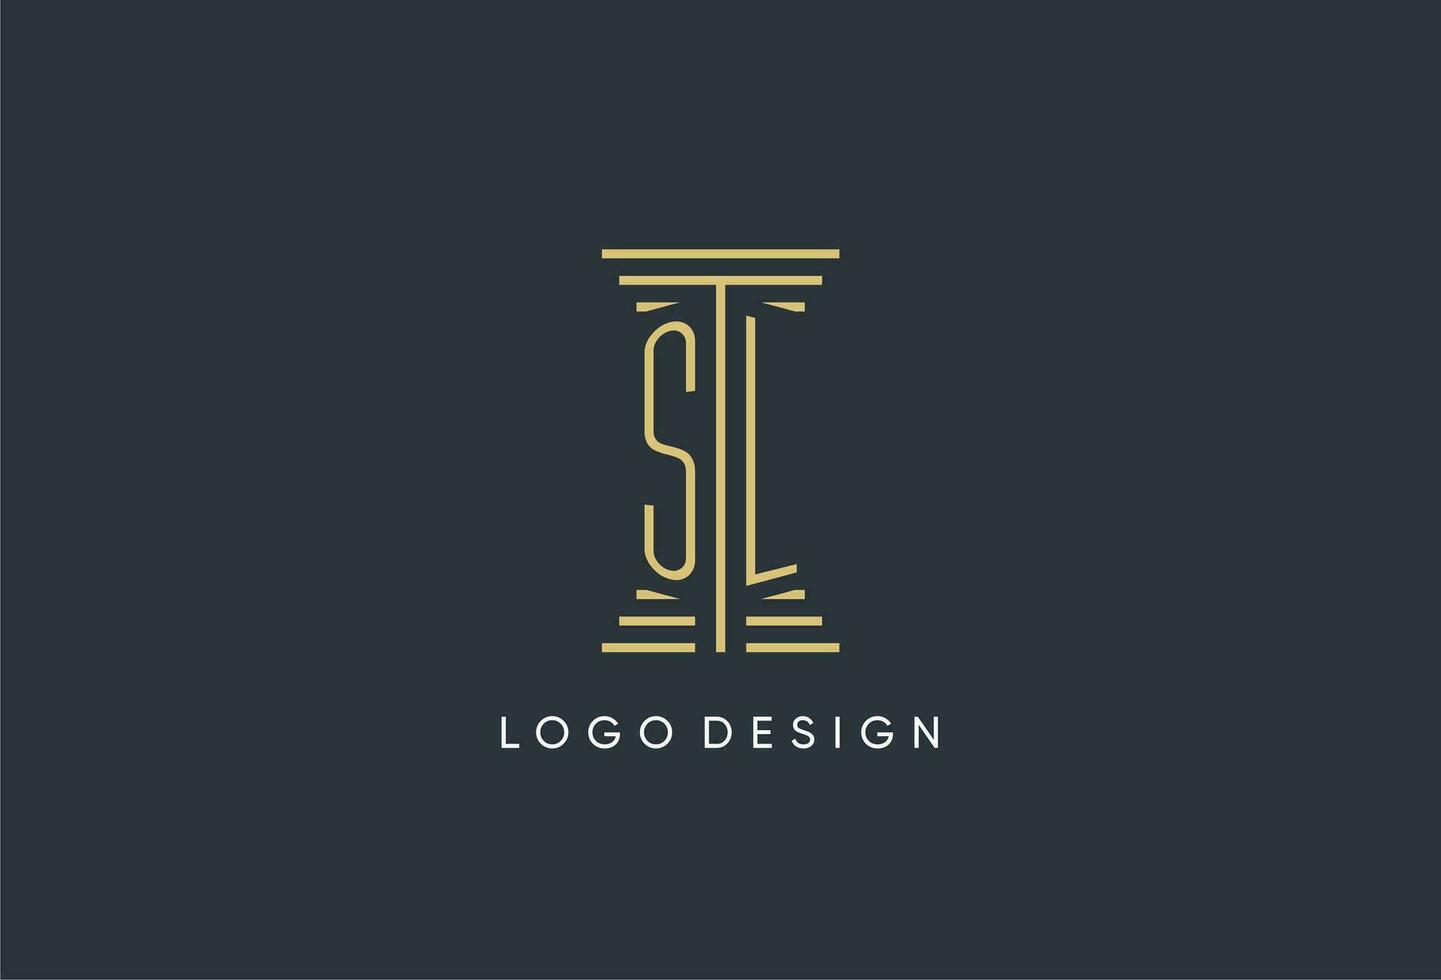 SL initial monogram with pillar shape logo design vector